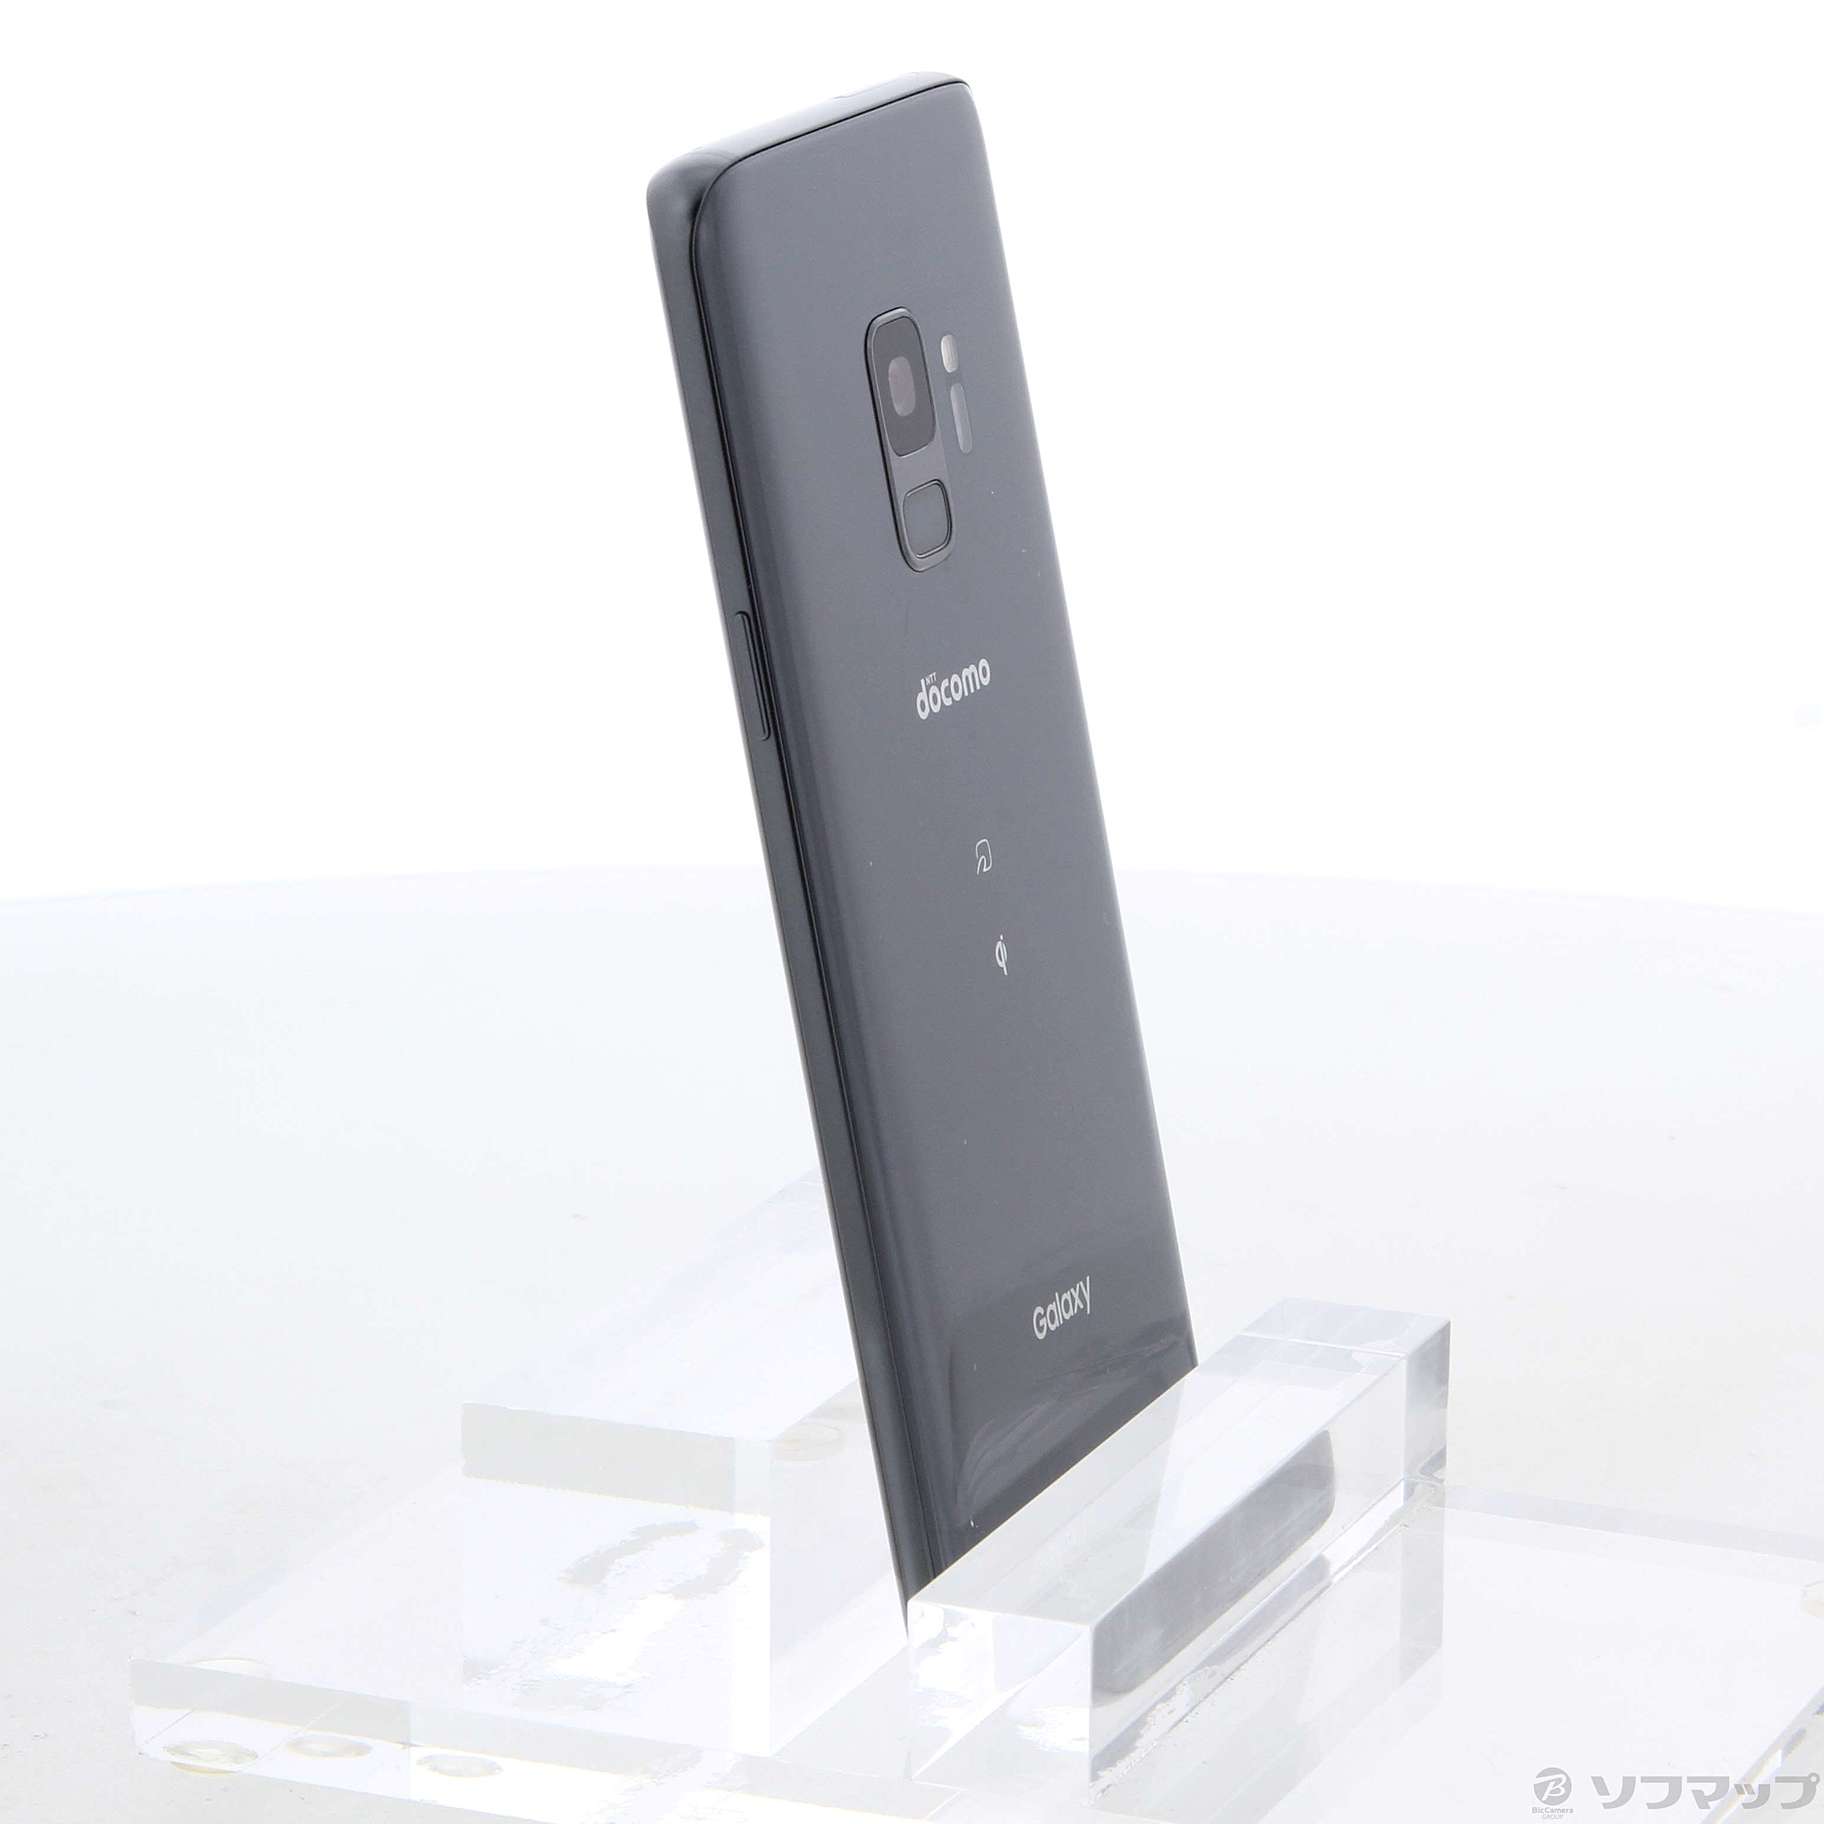 美品Galaxy S9+ Titanium Gray 64 GB docomo